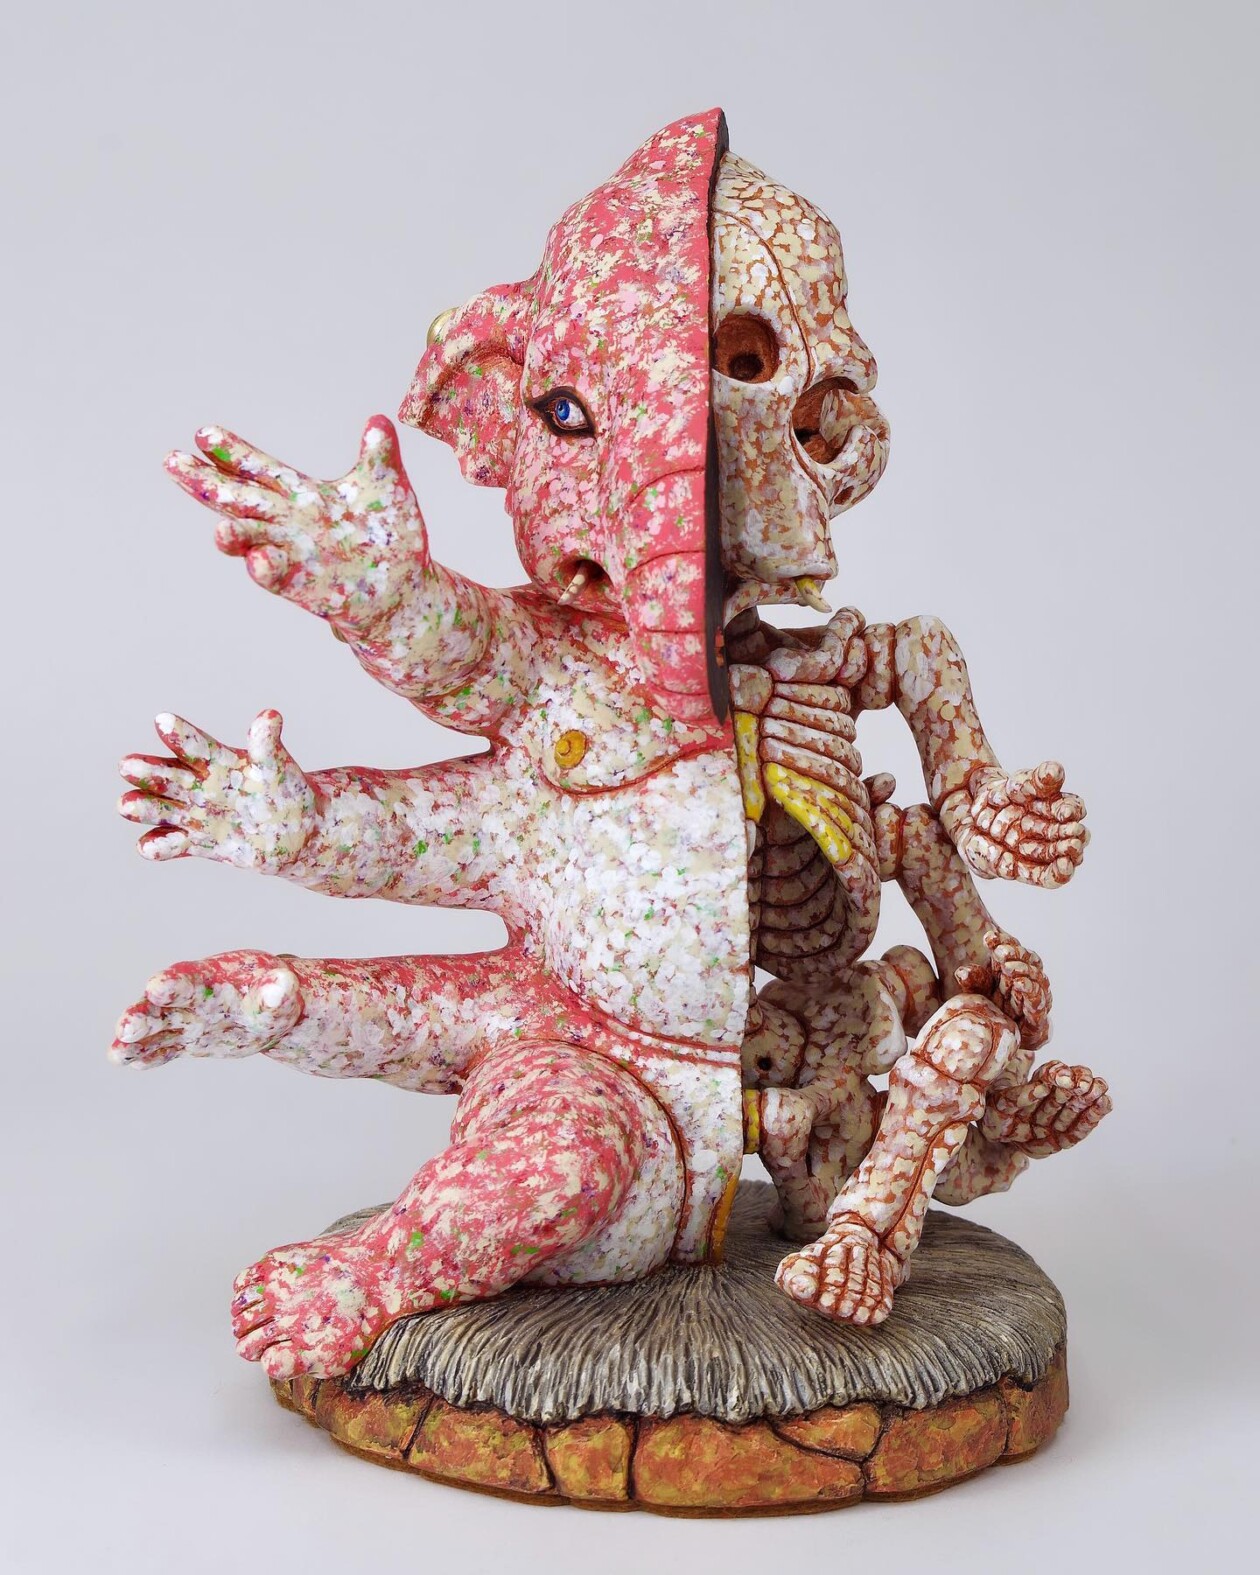 Masao Kinoshita’s Sculptures Explore Myth, Religion, And The Human Form (18)